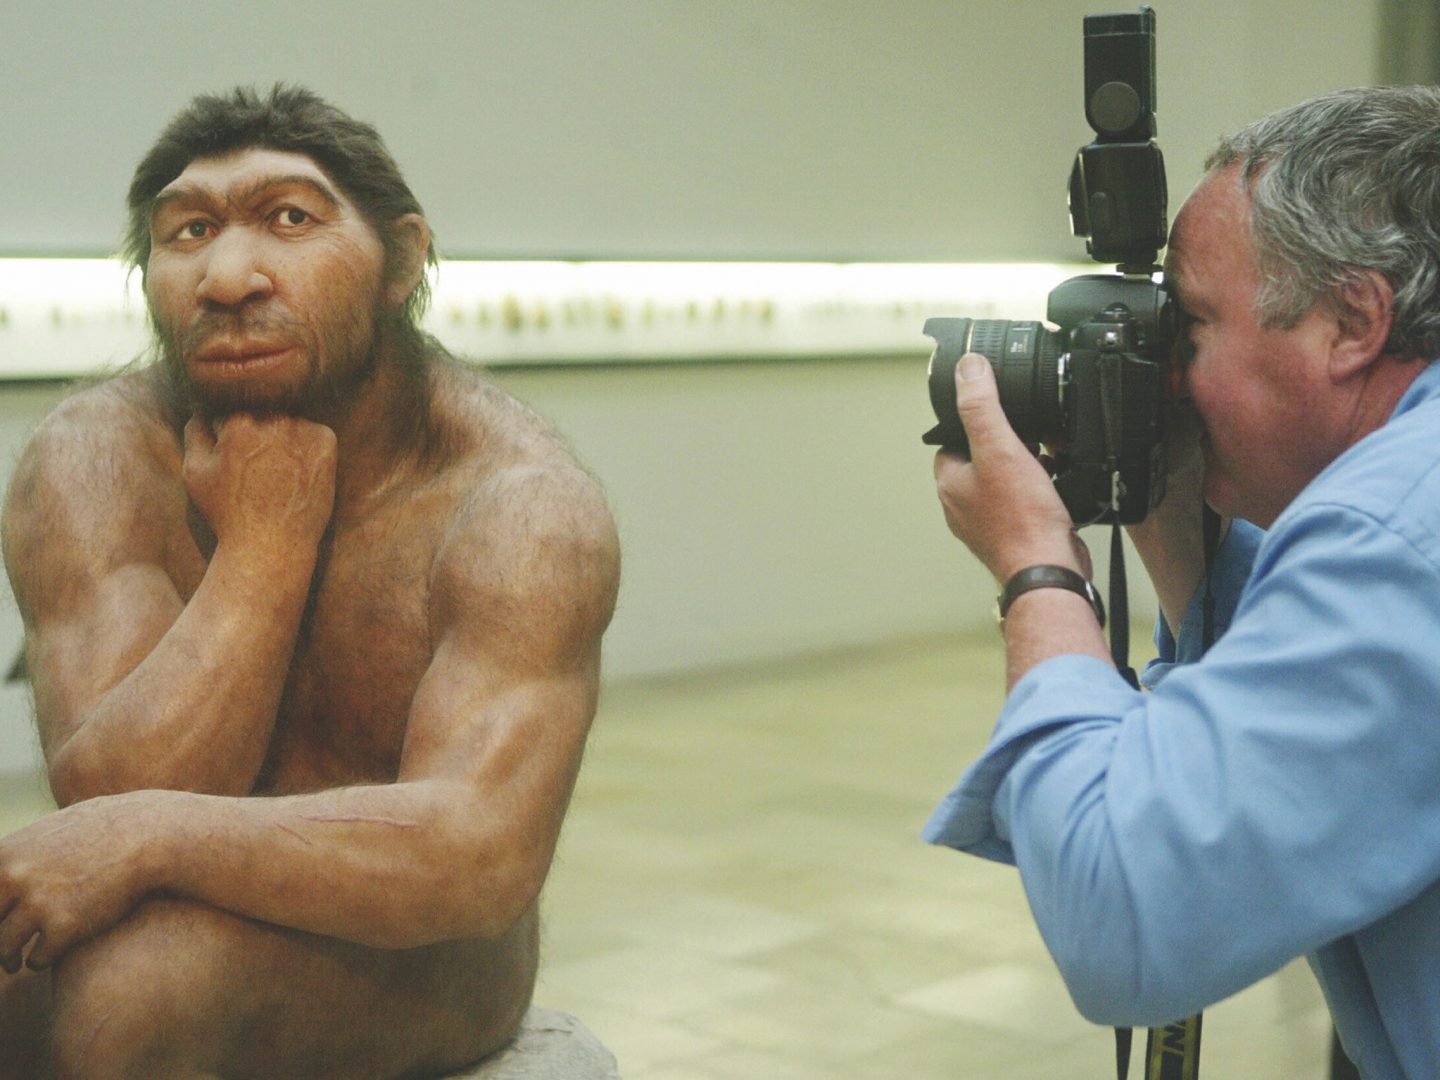 Man photographs Neanderthal figure